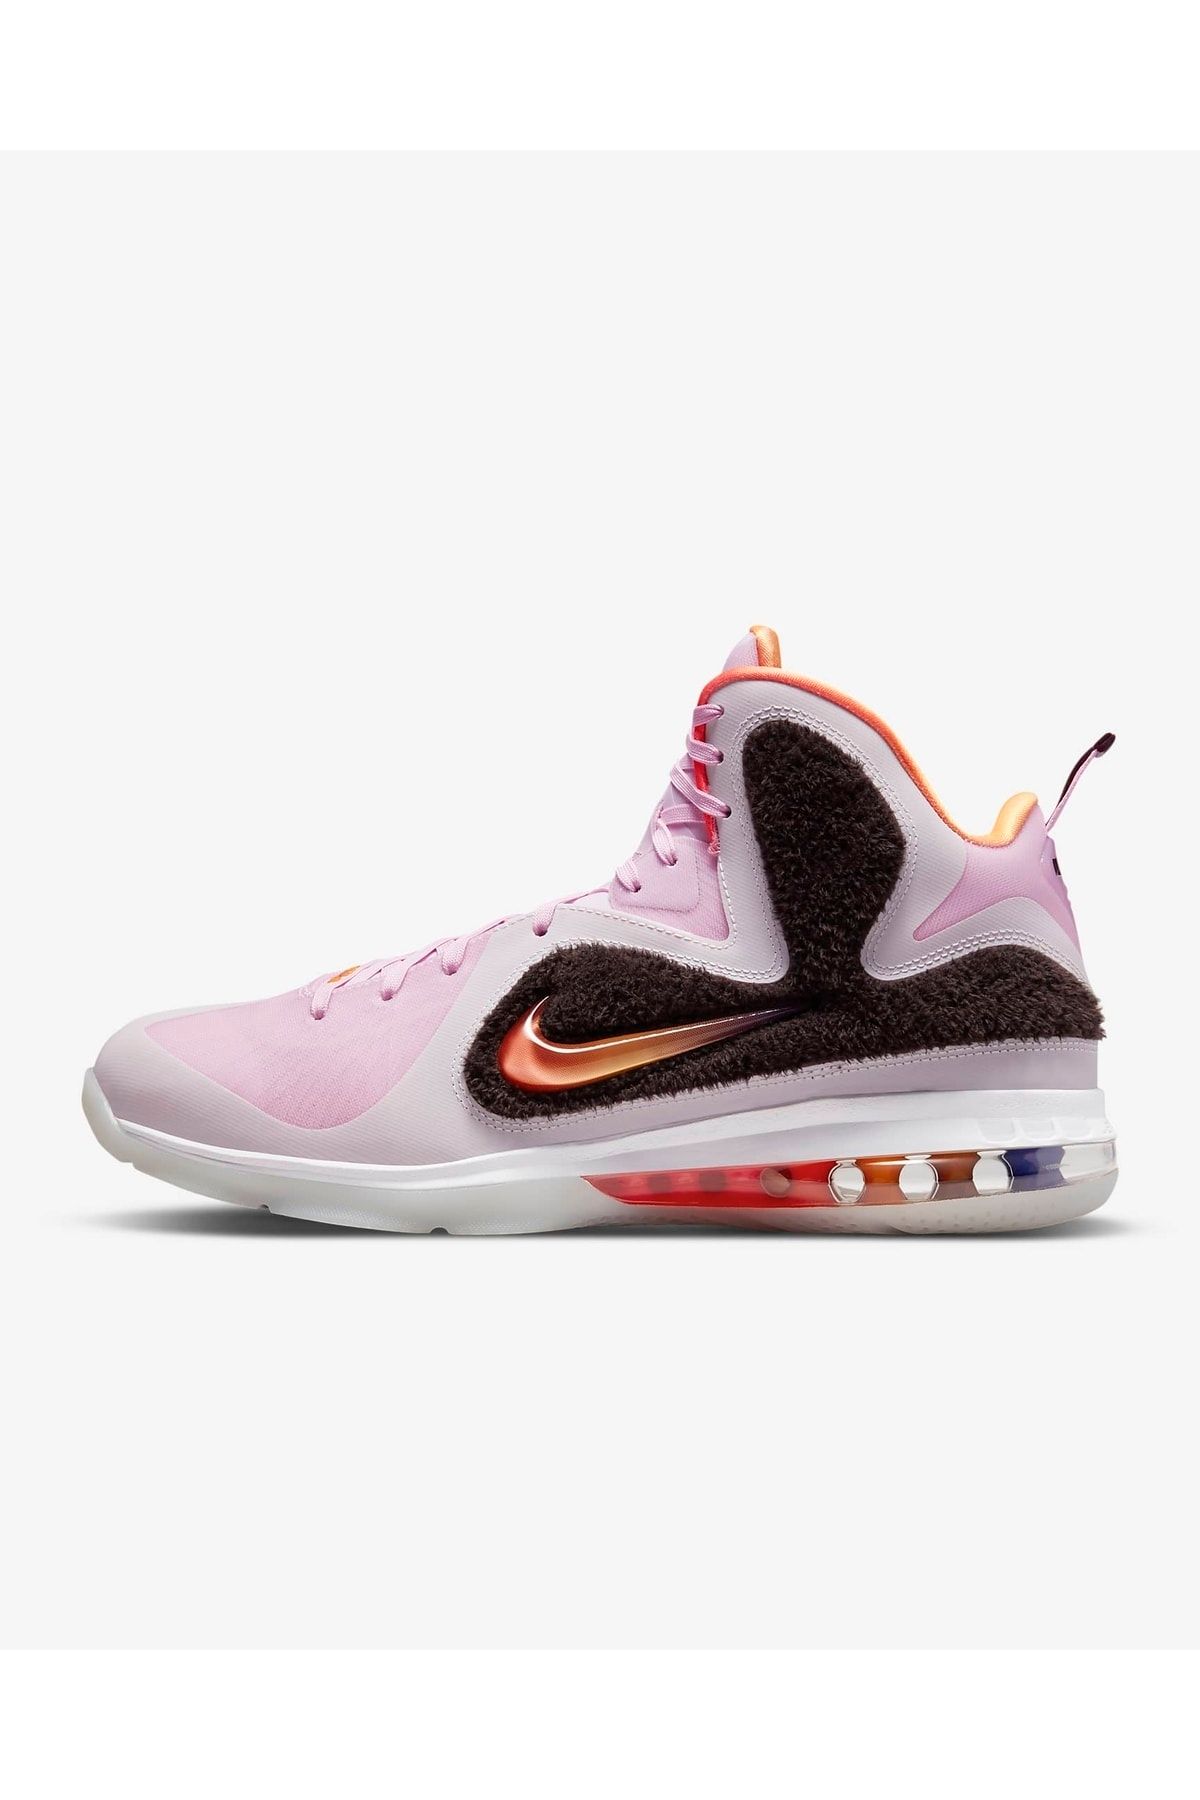 Nike Lebron Retro Ix Regal Pink And Velvet Brown Dj3908-600